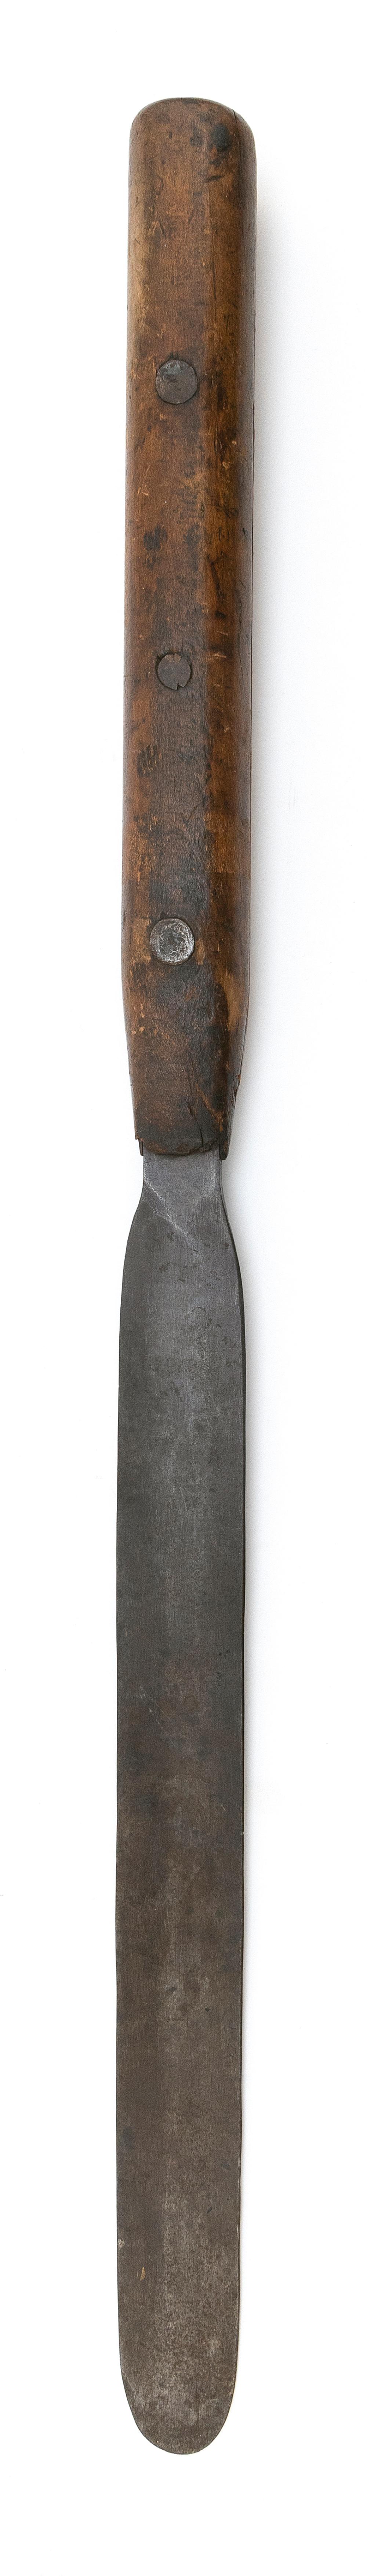 STEEL FLENSING KNIFE MID-19TH CENTURY